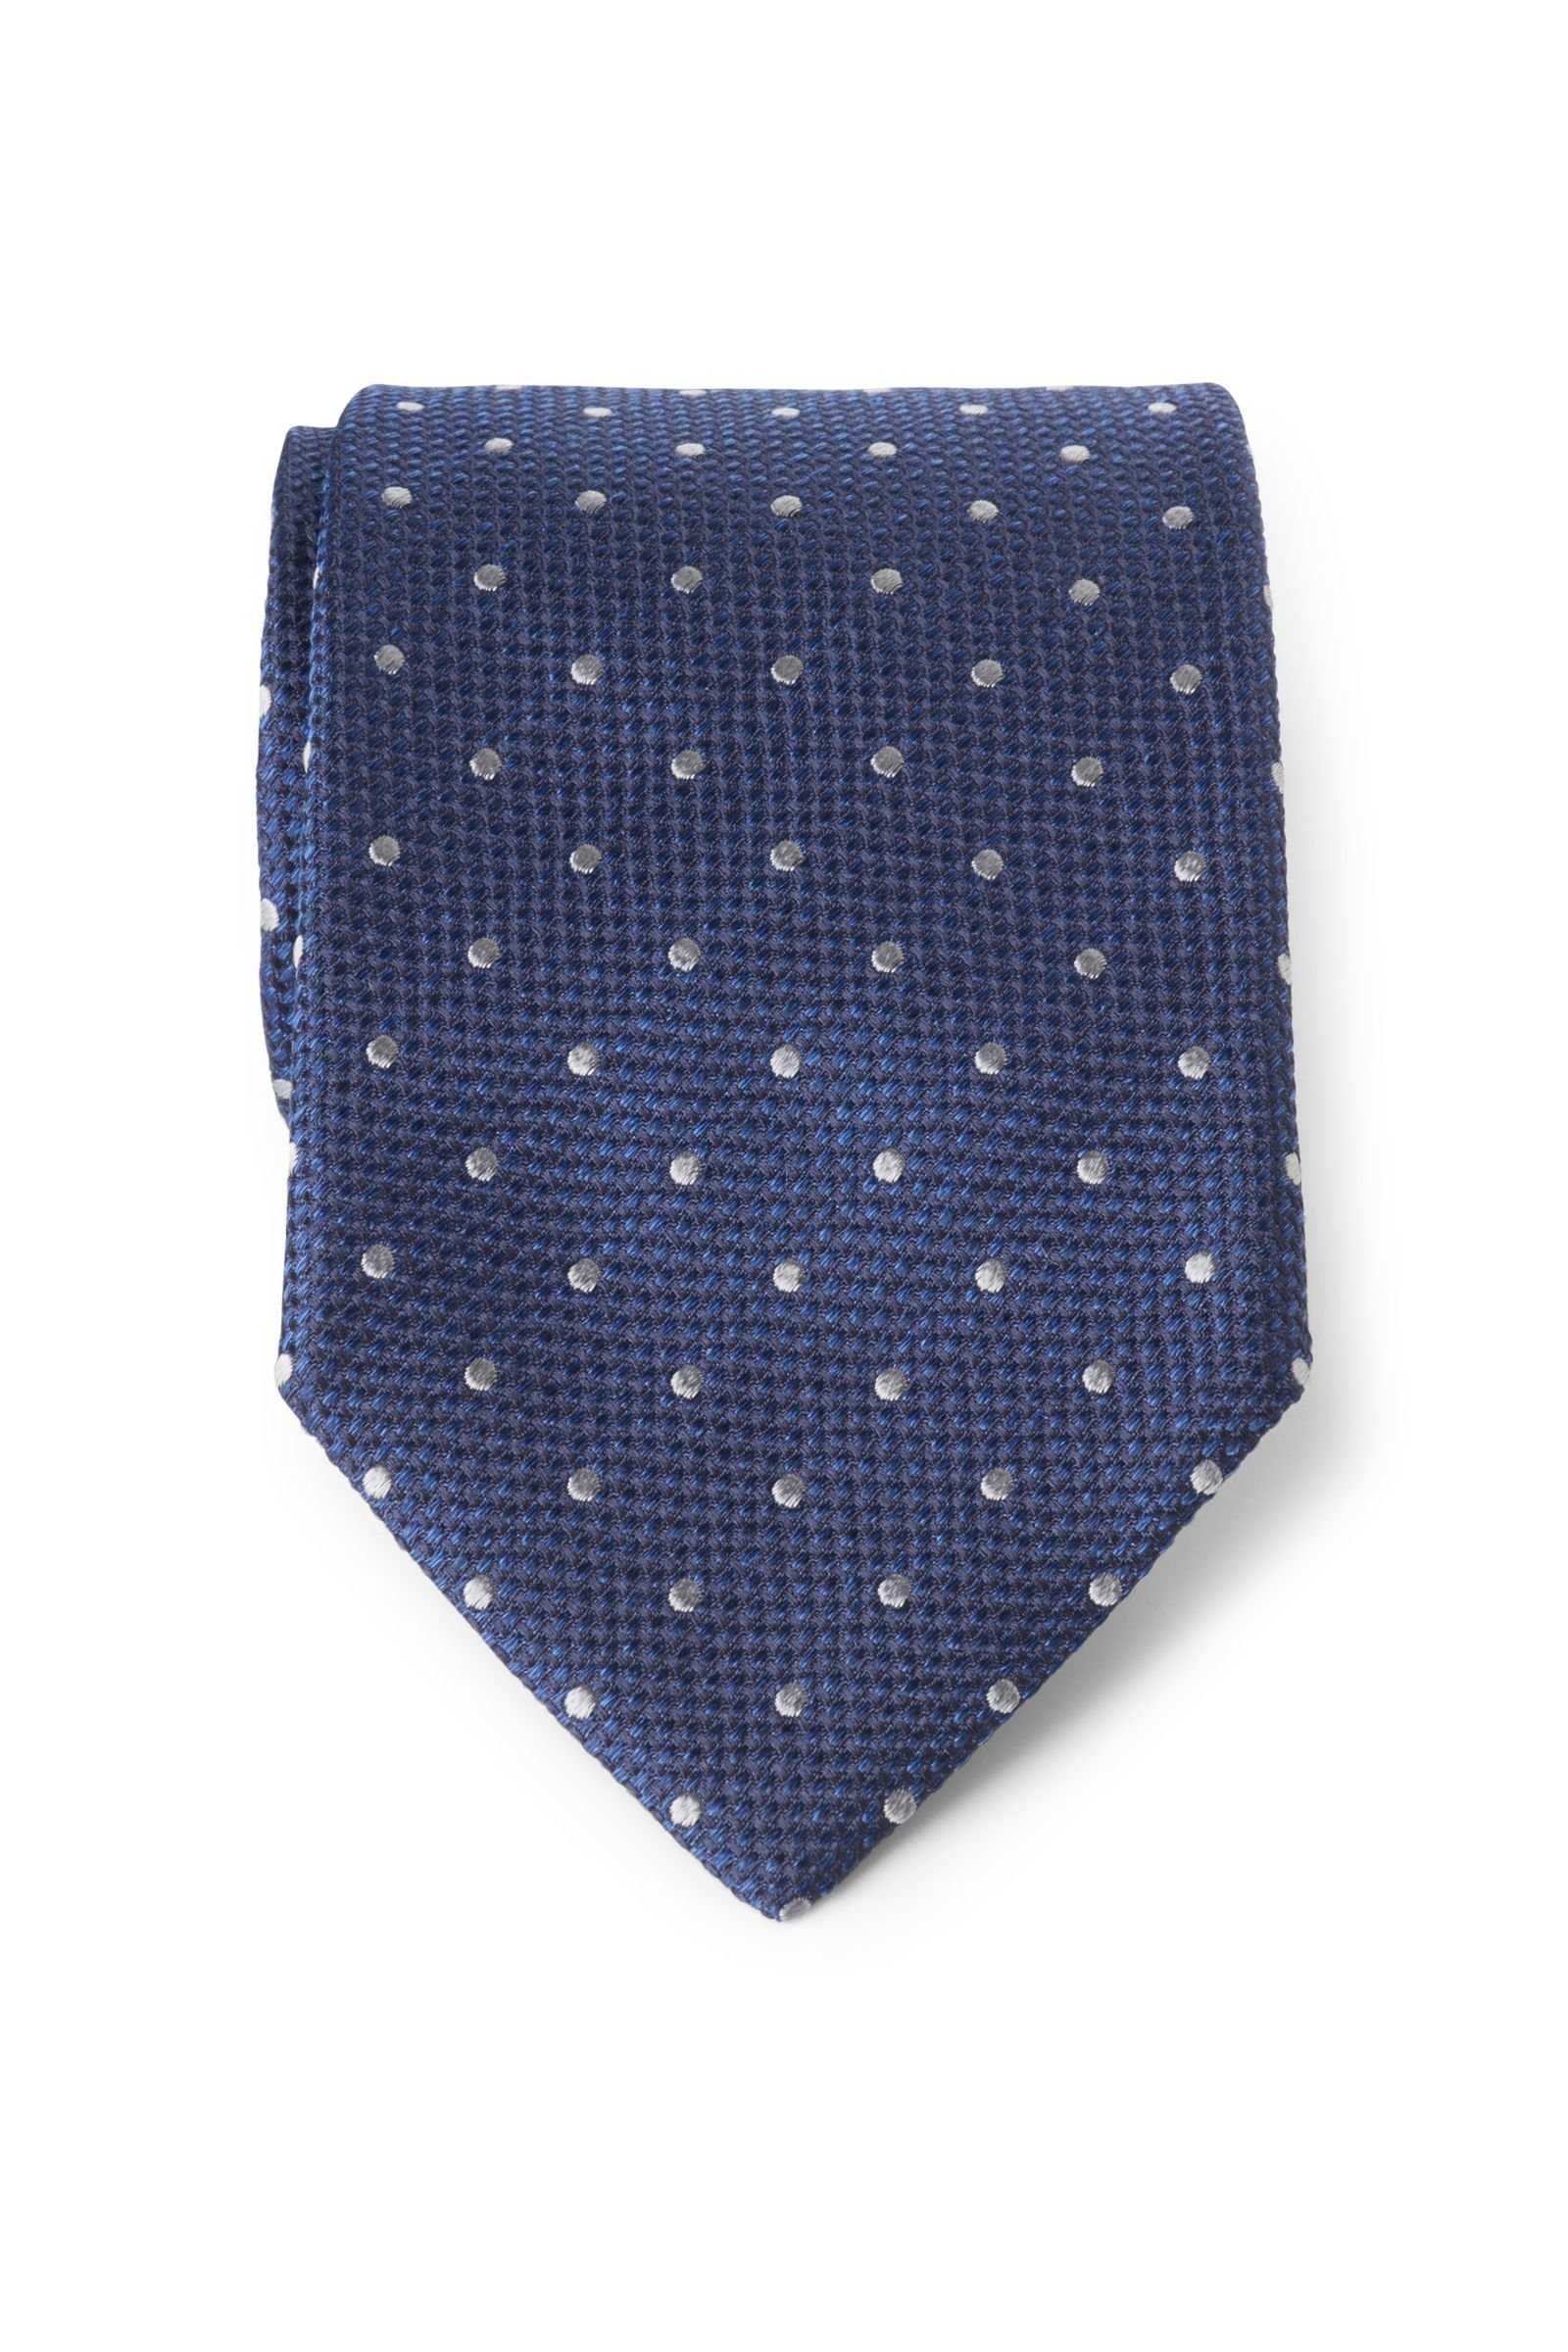 Silk tie navy patterned